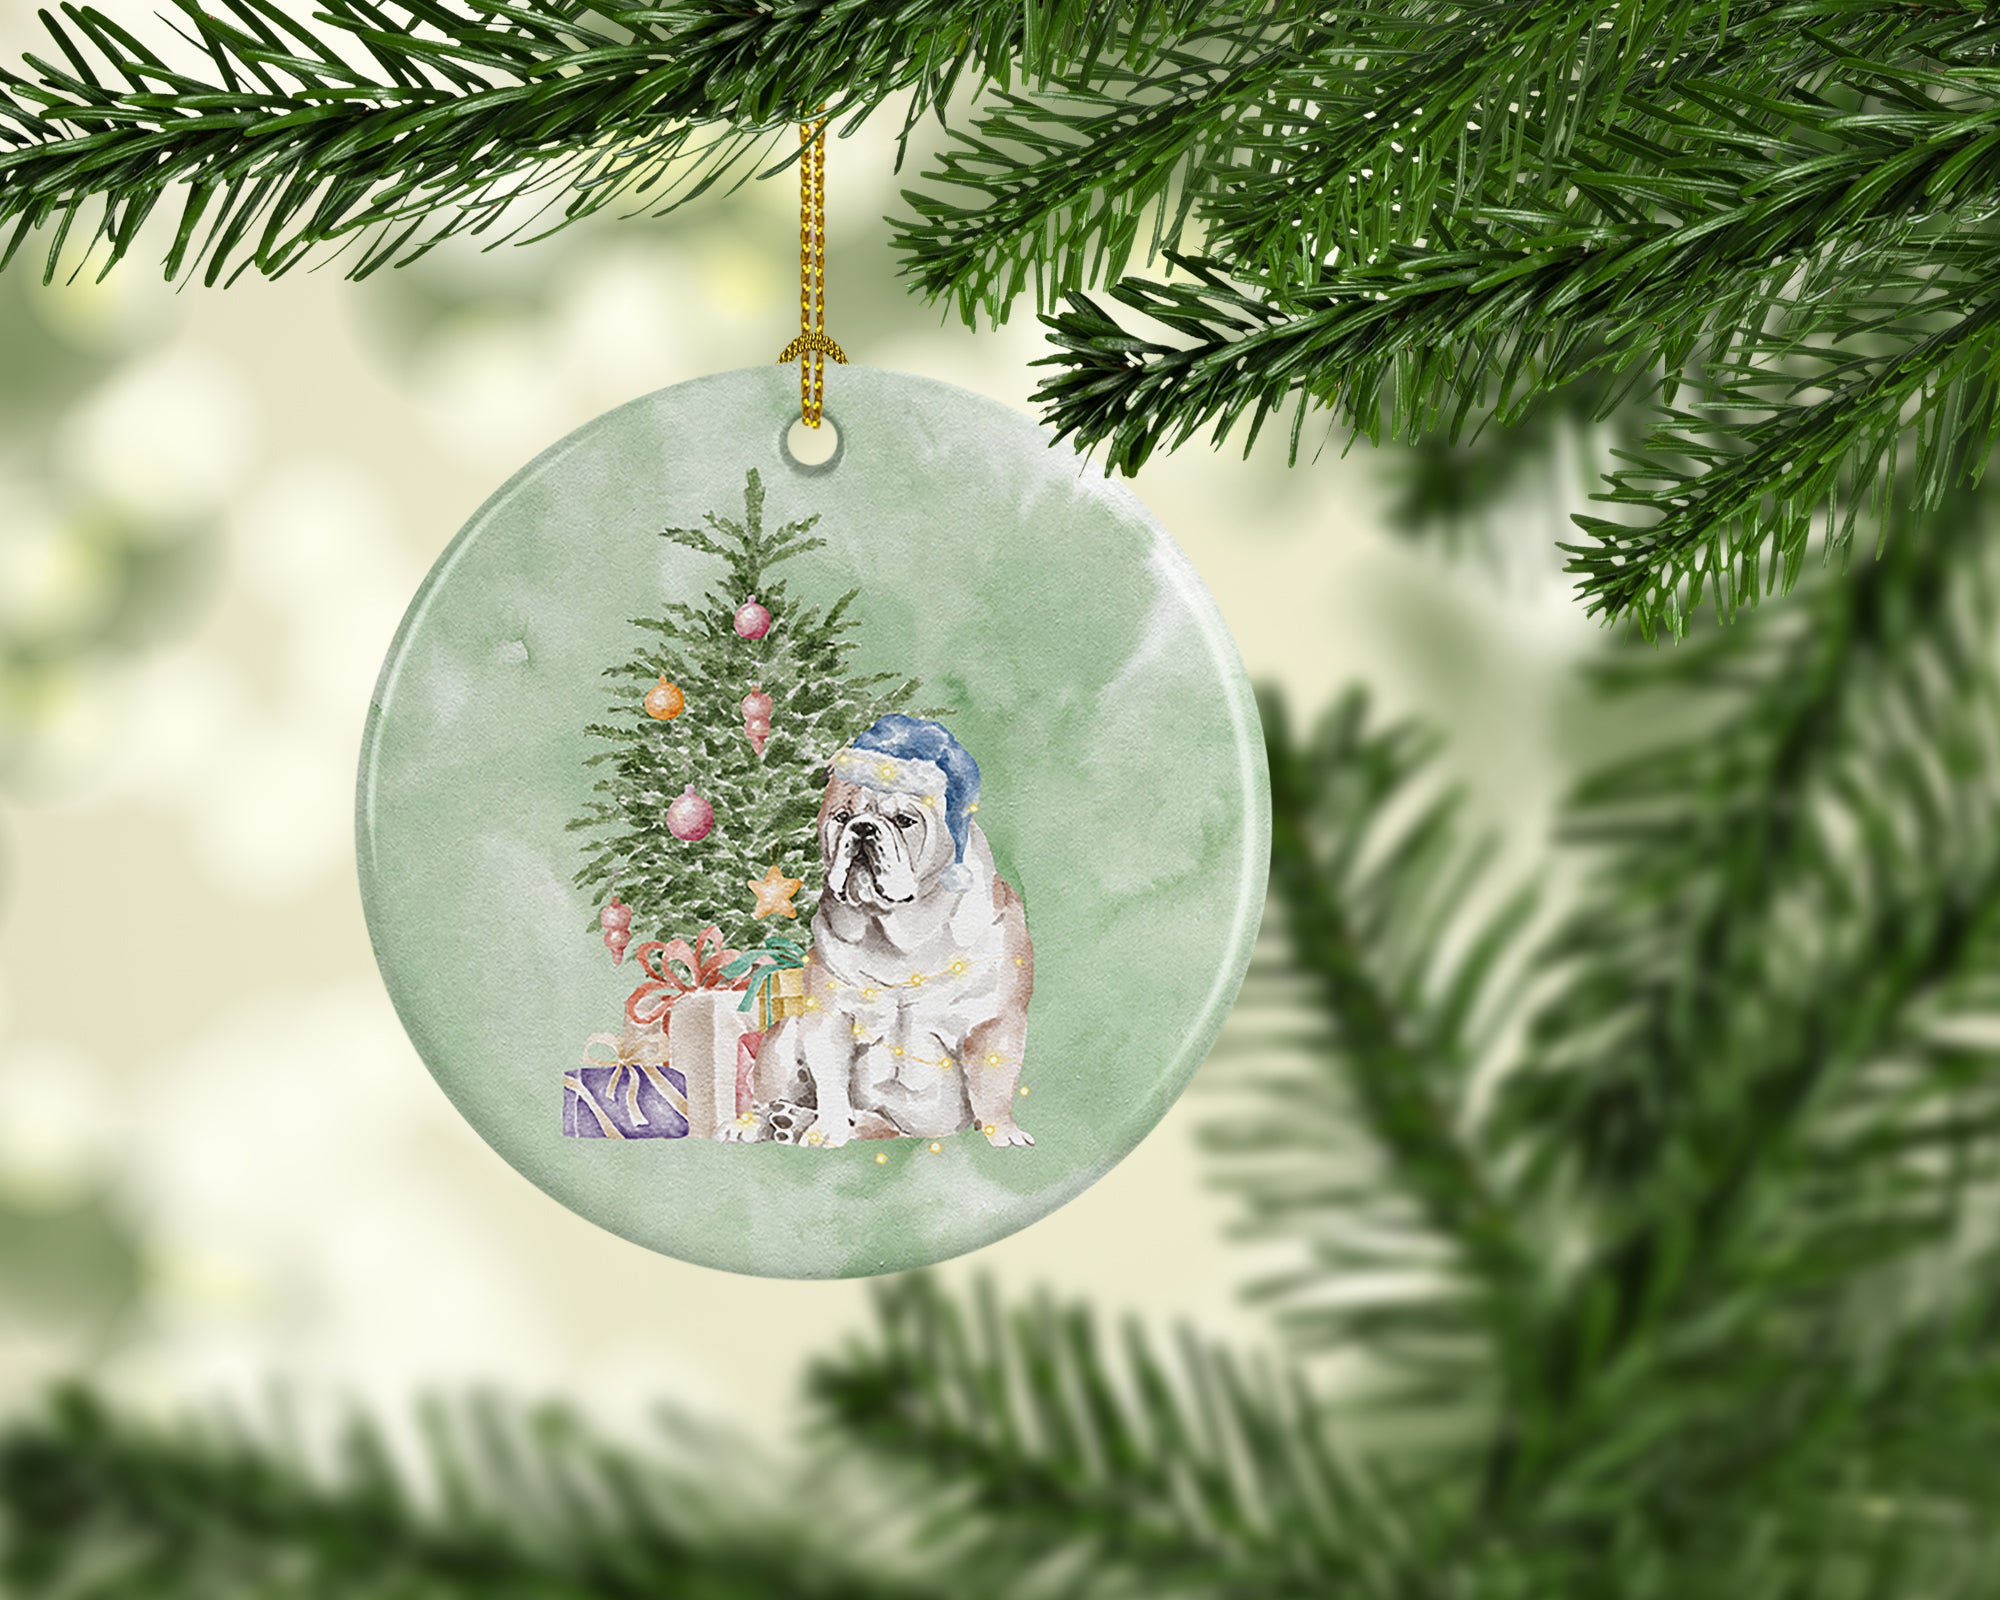 Buy this Christmas English Bulldog Ceramic Ornament